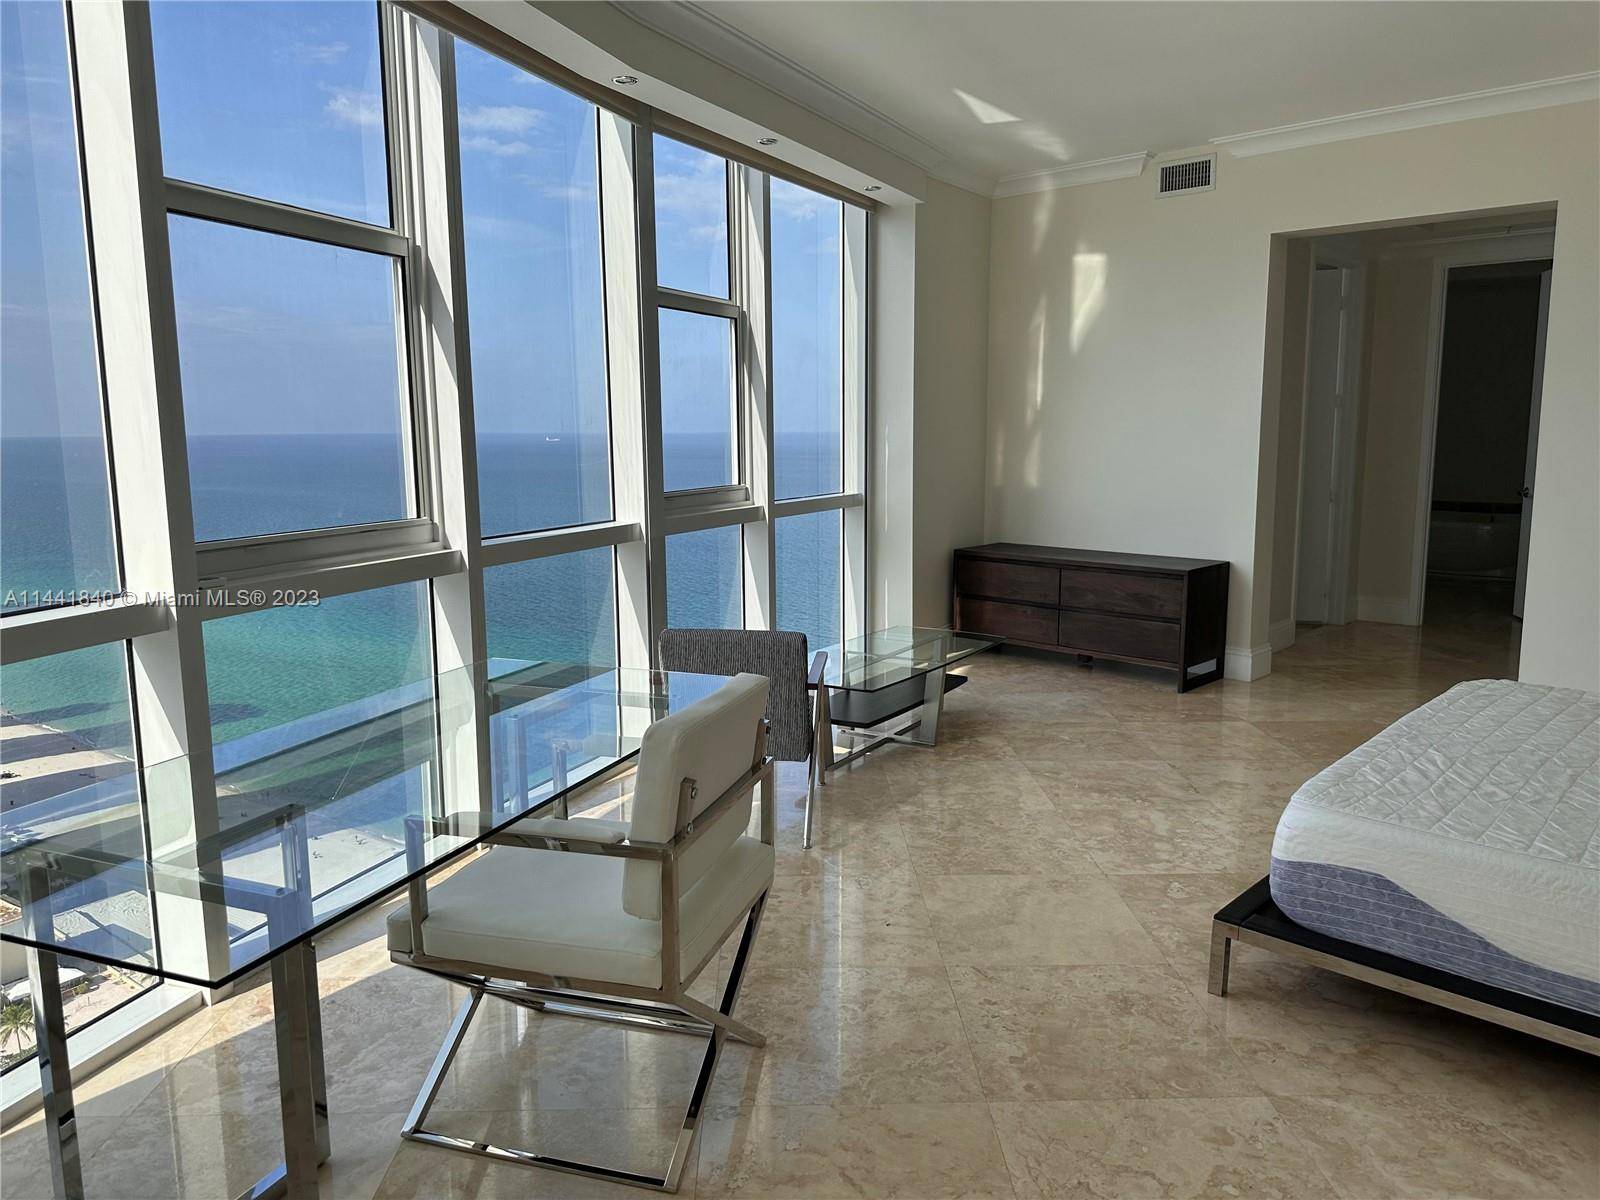 Breathtaking, lavish 3 bedroom plus 2 dens spread over 3016 sq feet plus balcony.